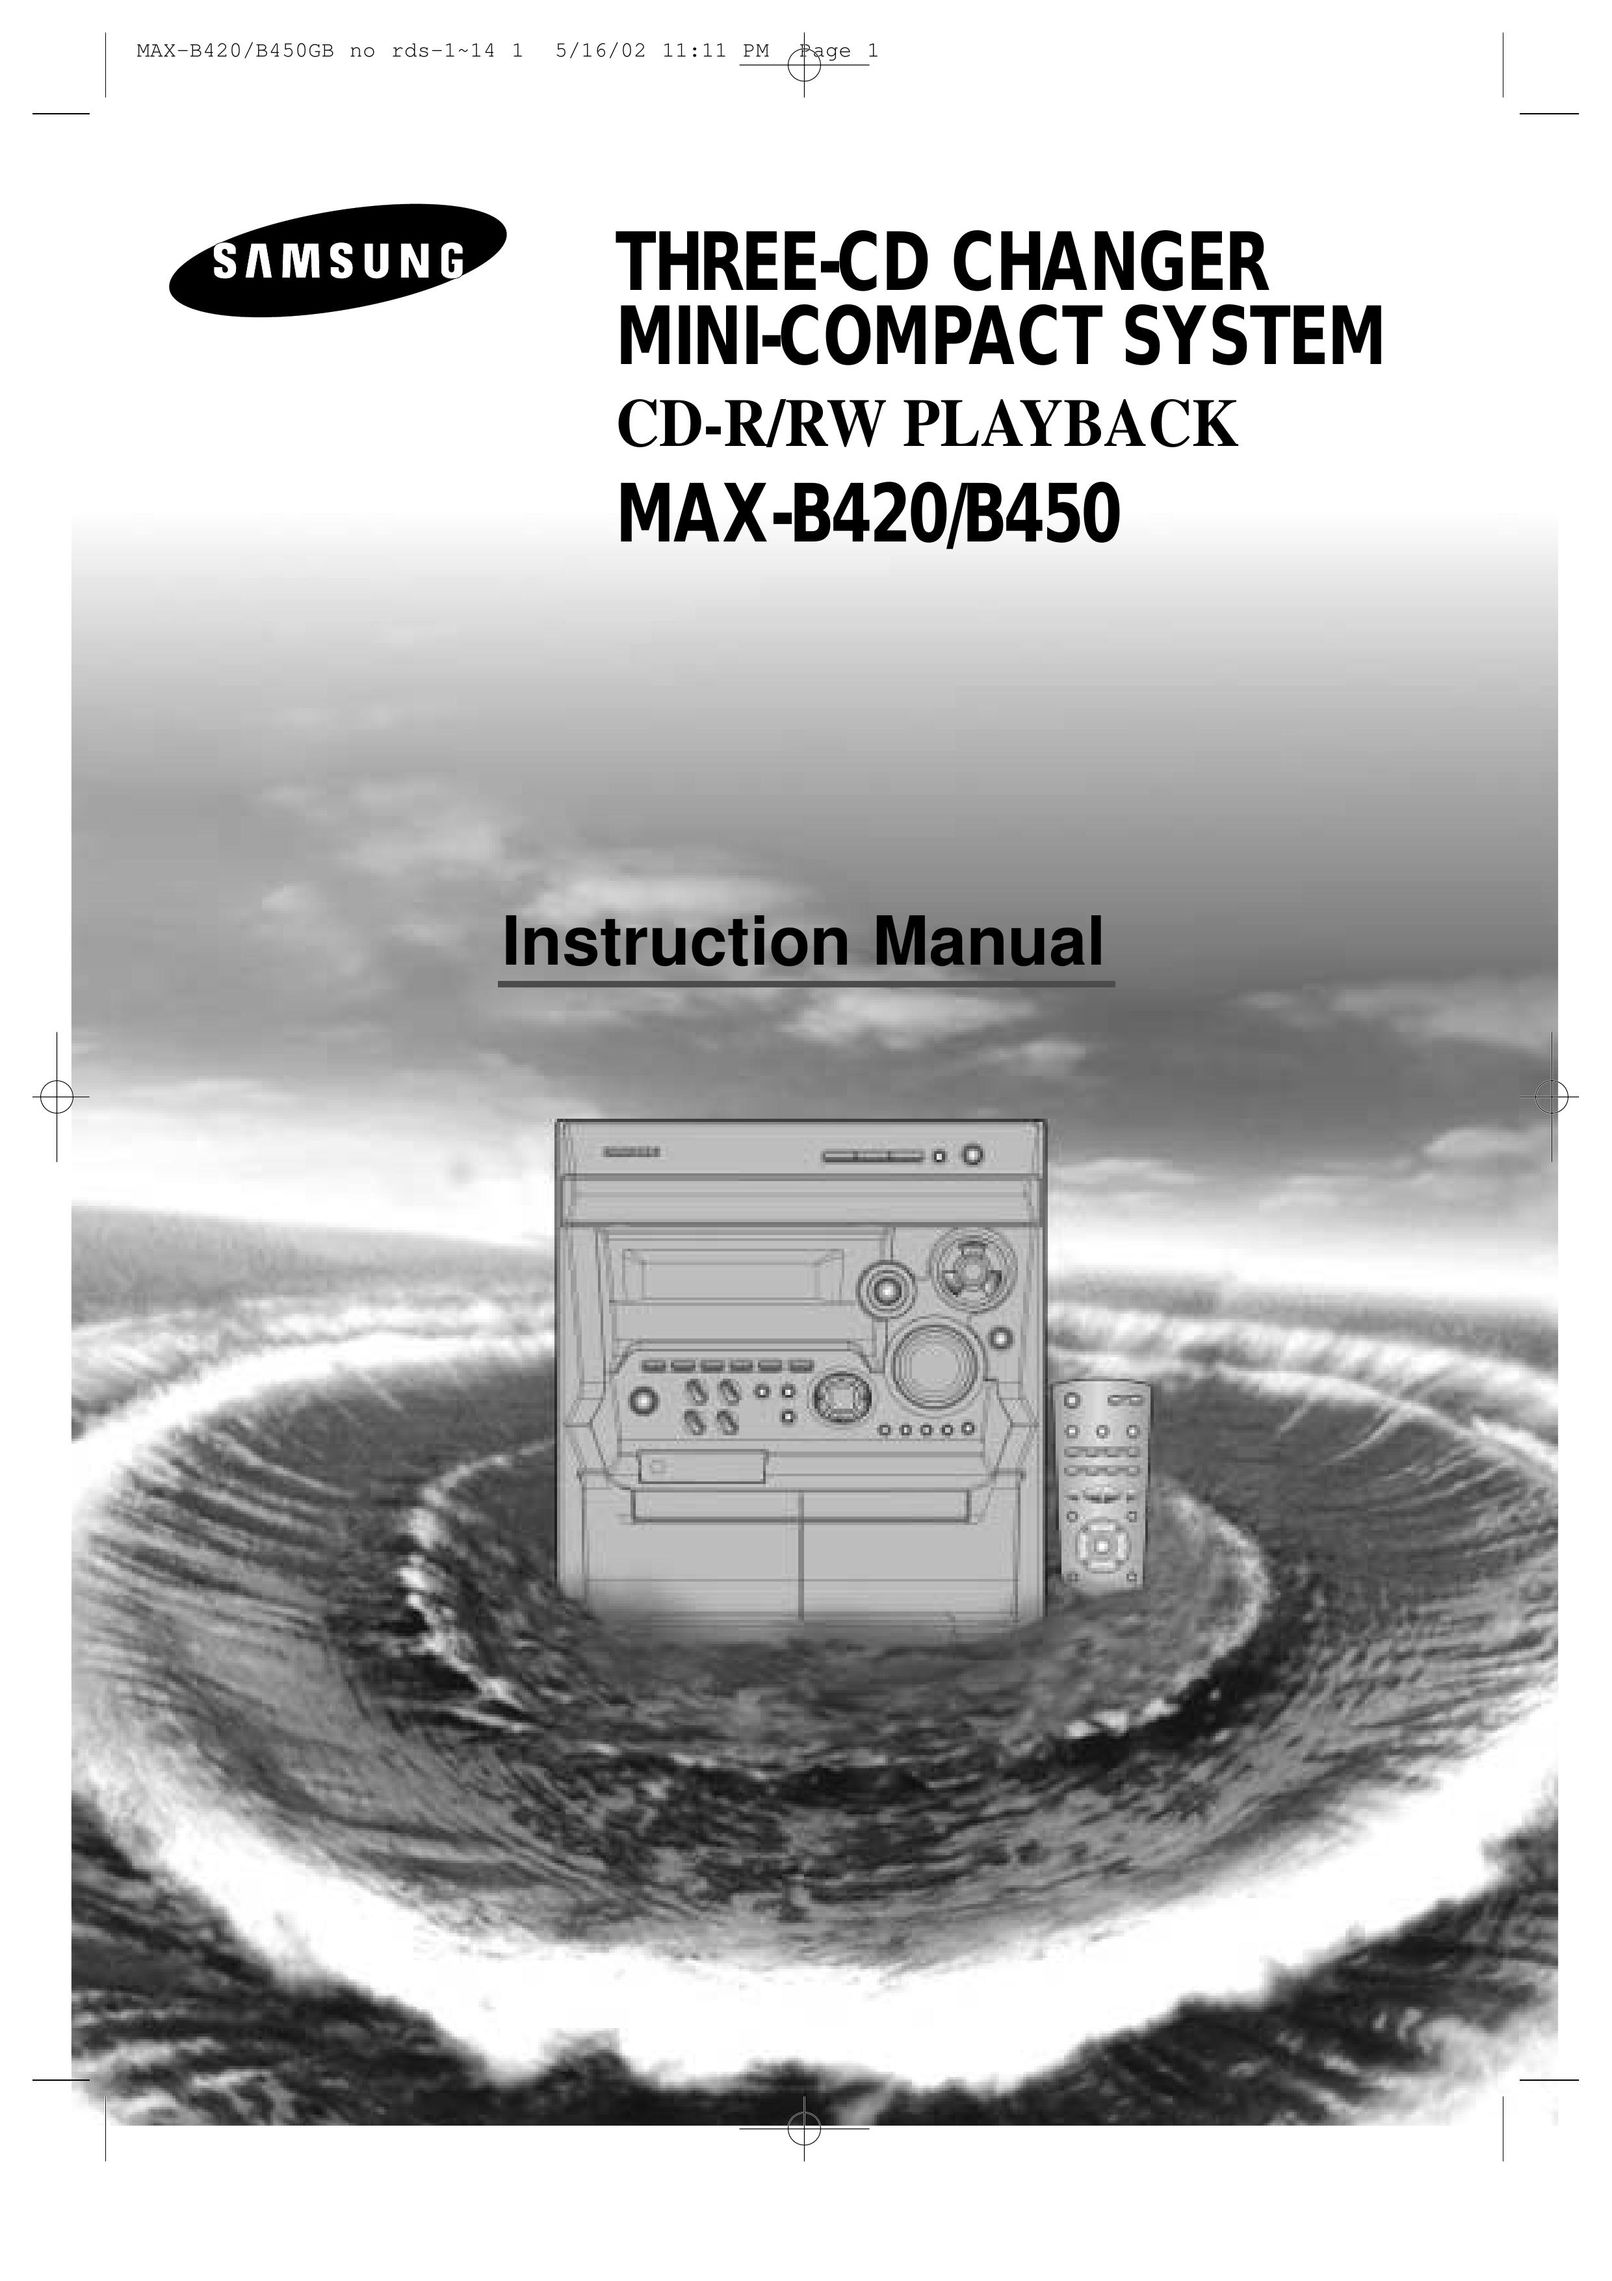 Samsung MAX-B450 CD Player User Manual